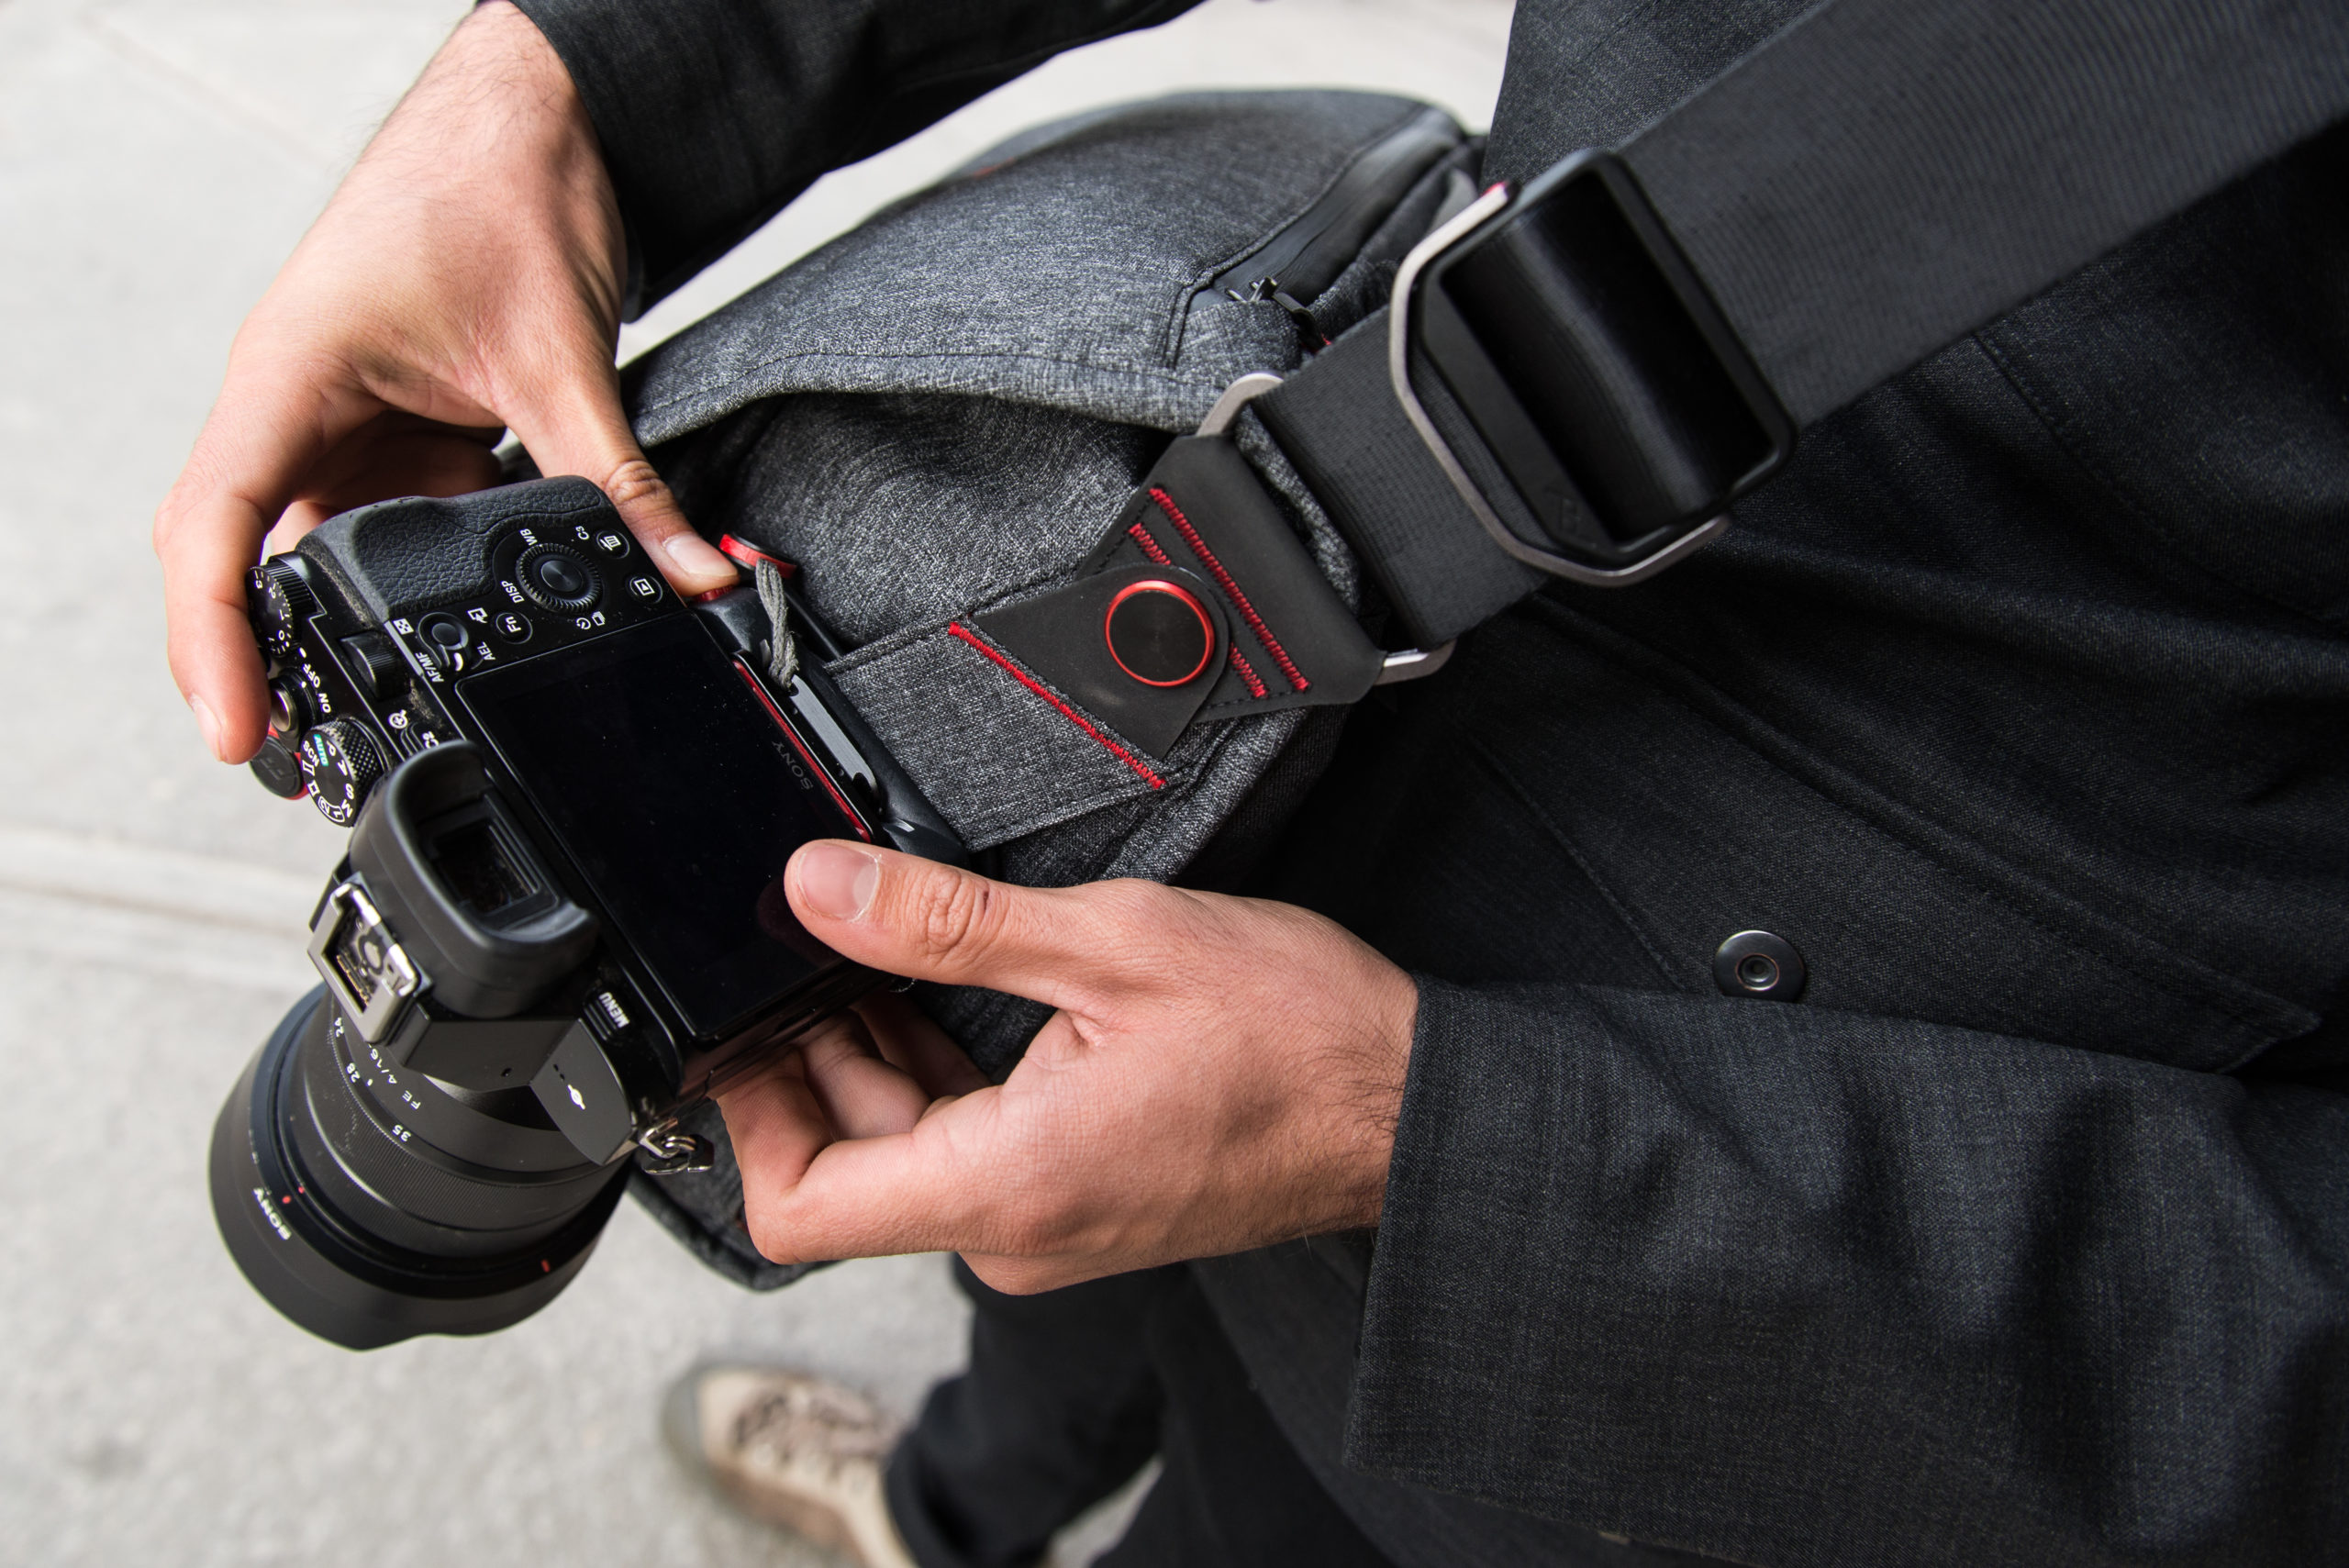 Peak Design Everyday Messenger Review: The Perfect Camera Bag?